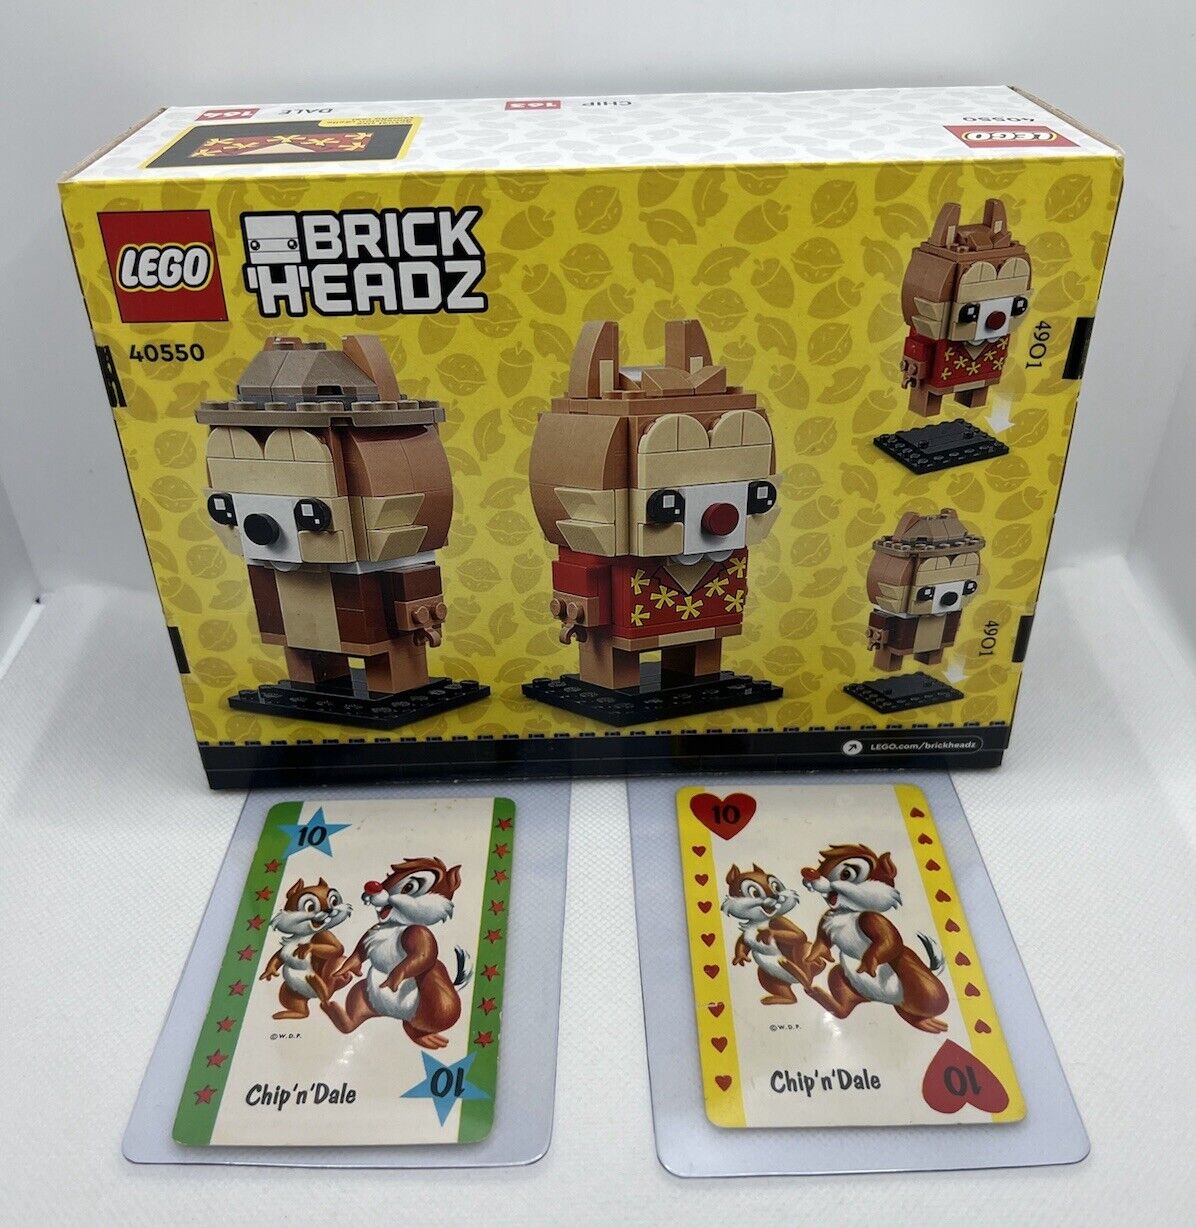 LEGO BRICKHEADZ: Chip & Dale (40550) Factory Sealed And Vintage Disney Cards..